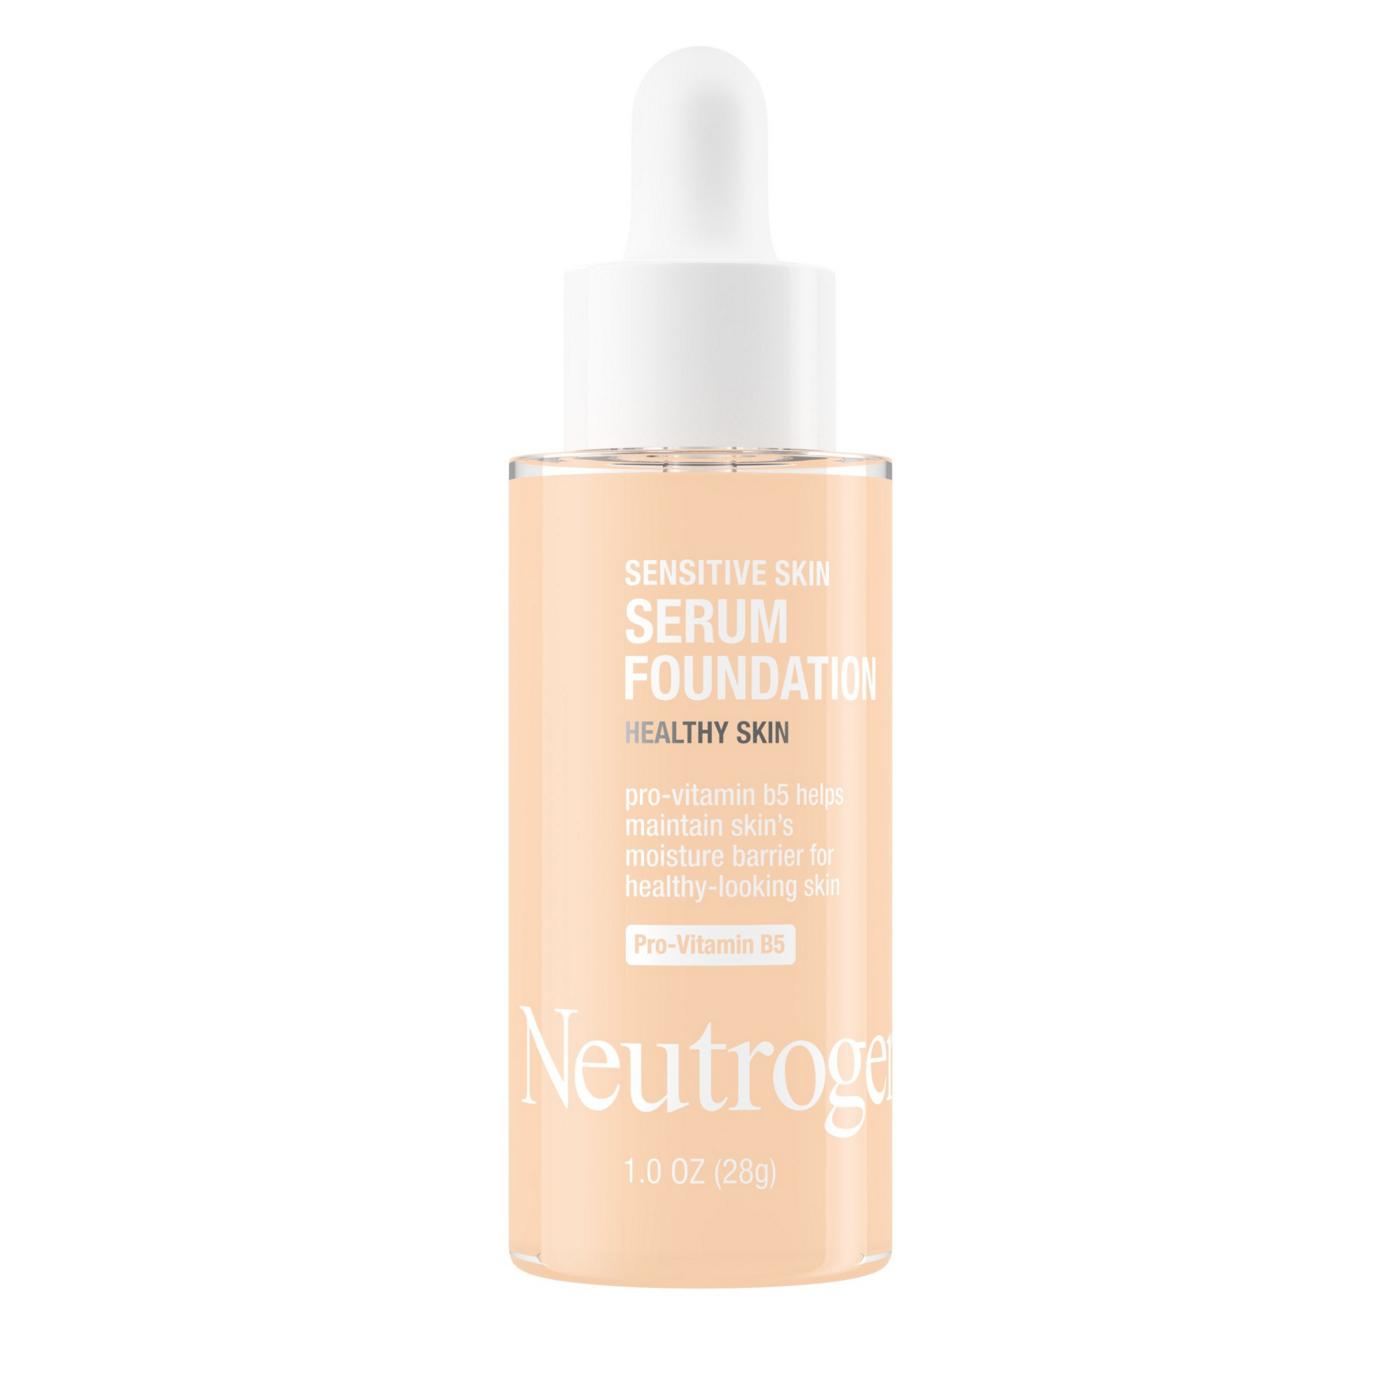 Neutrogena Healthy Skin Sensitive Skin Serum Foundation, Light 01; image 1 of 2